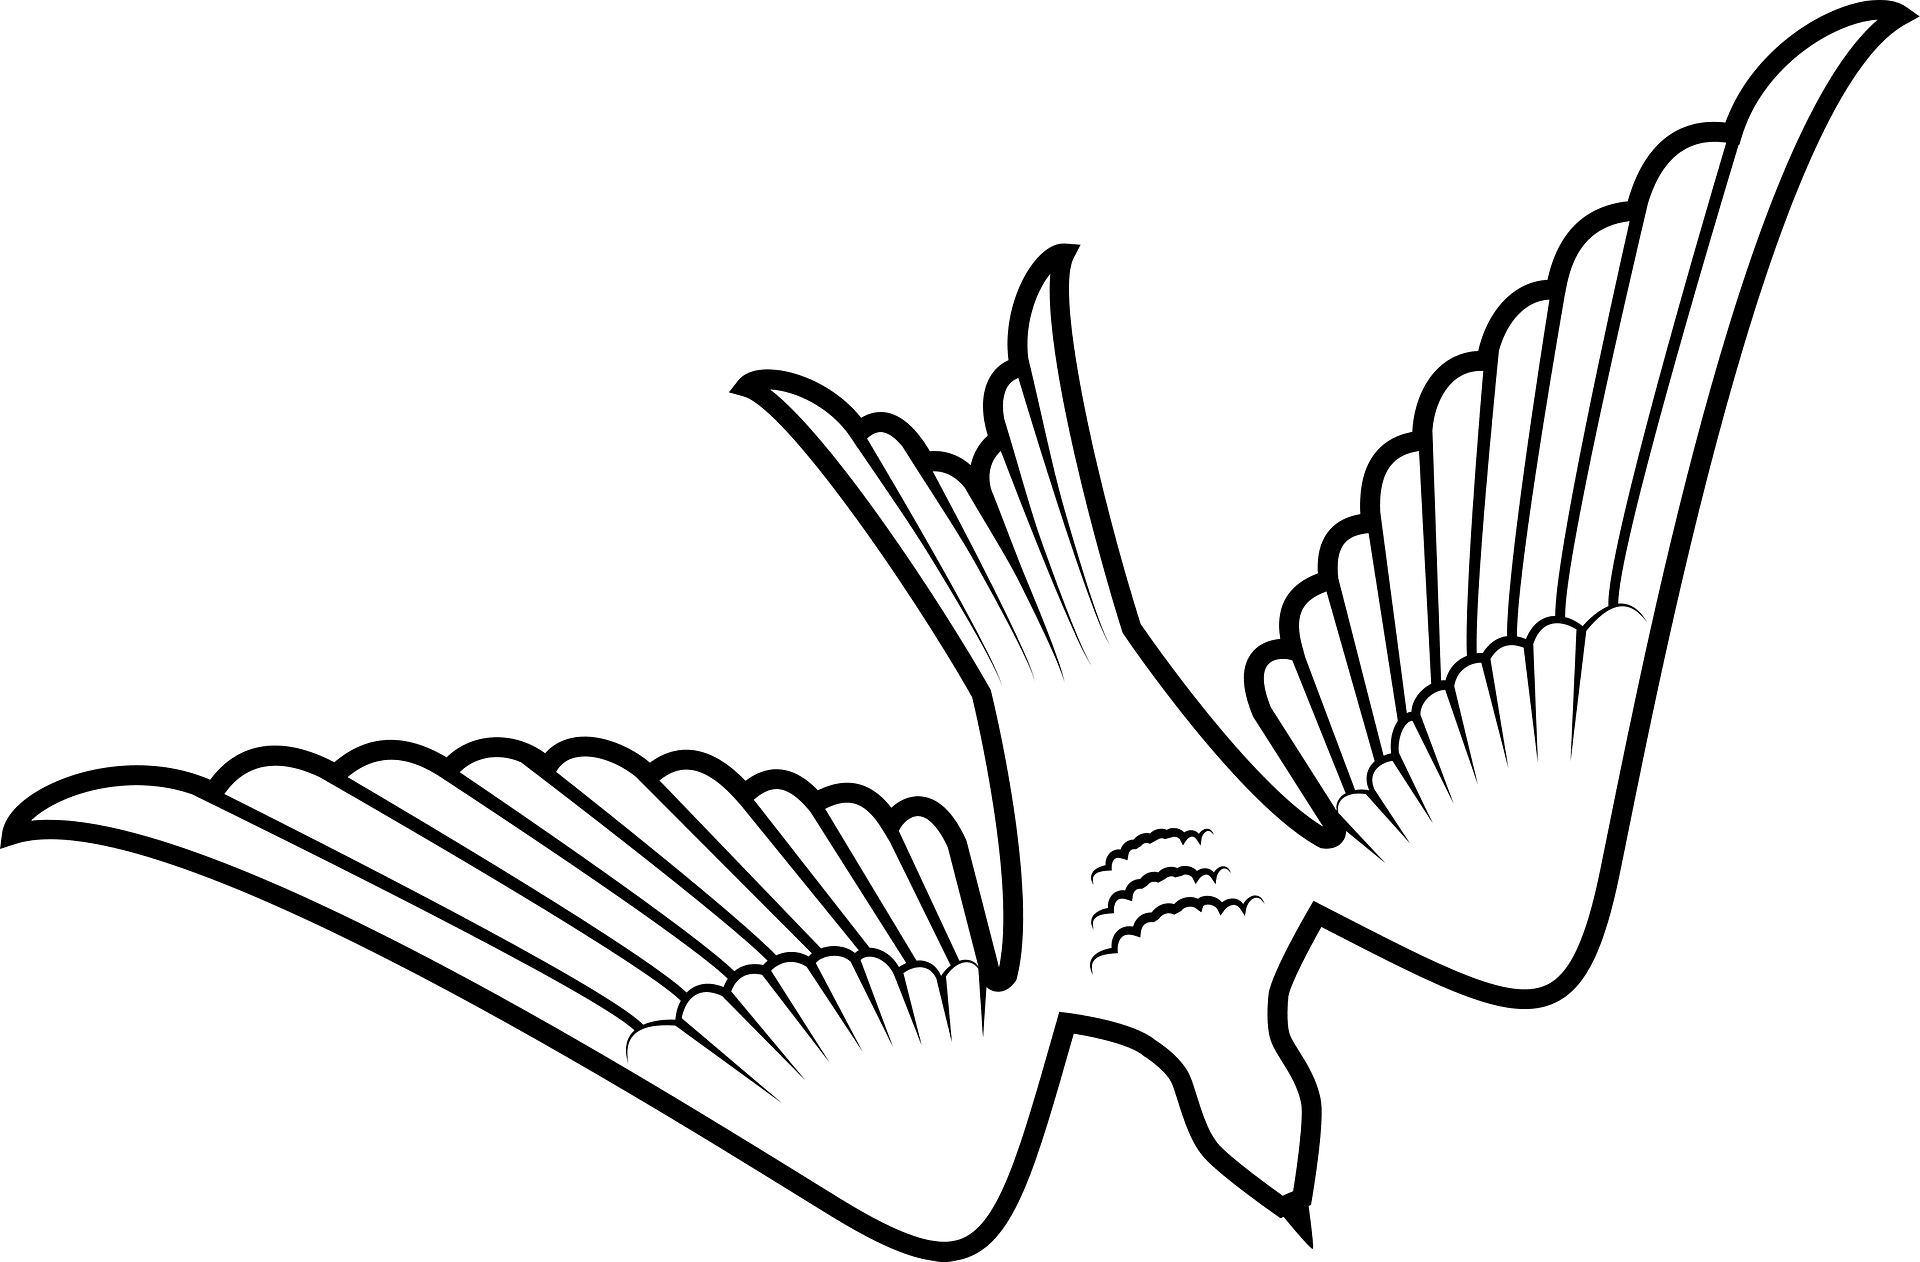 Coloriage d'une colombe